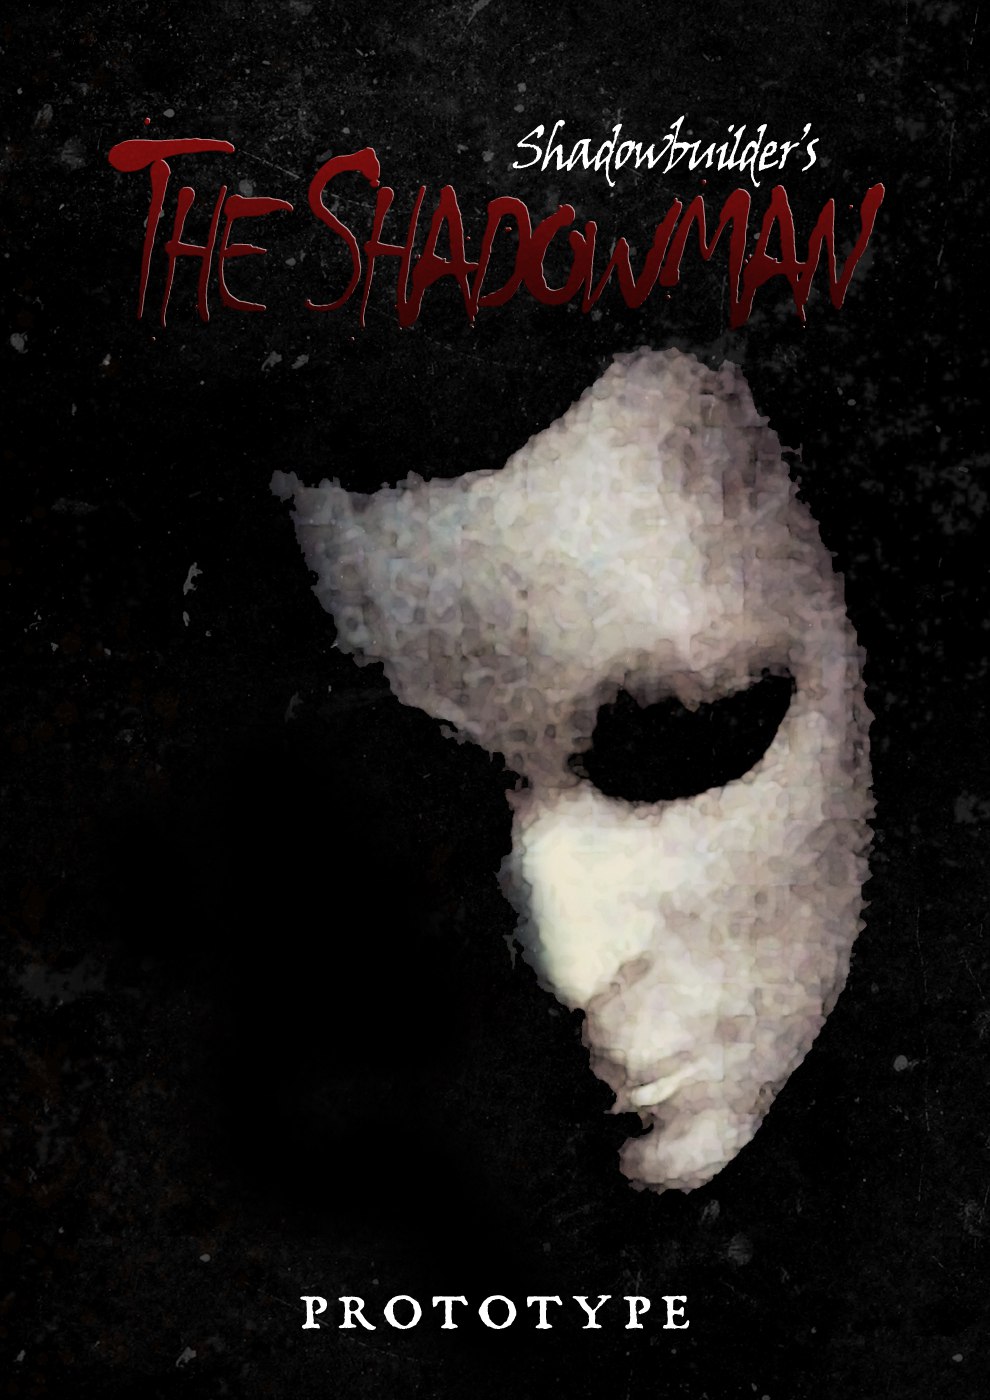 The Shadowman: Prototype